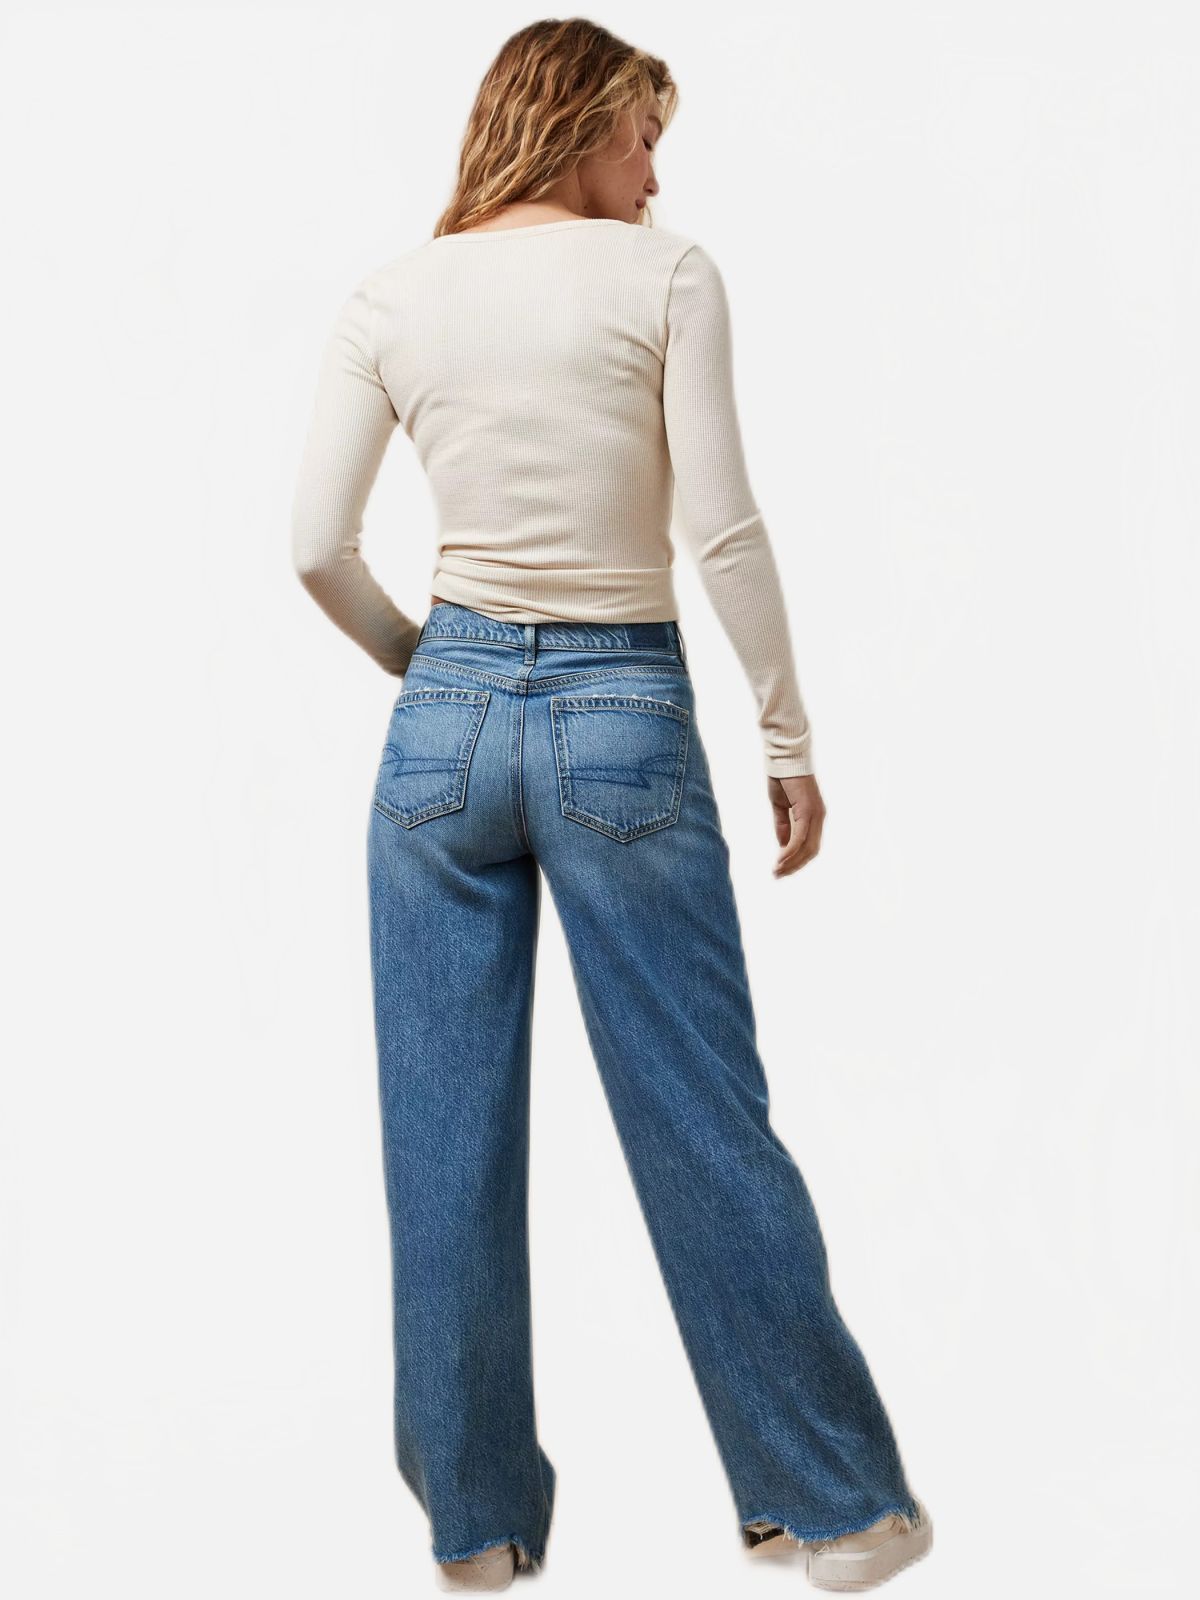  ג'ינס בגזרה רחבה של AMERICAN EAGLE